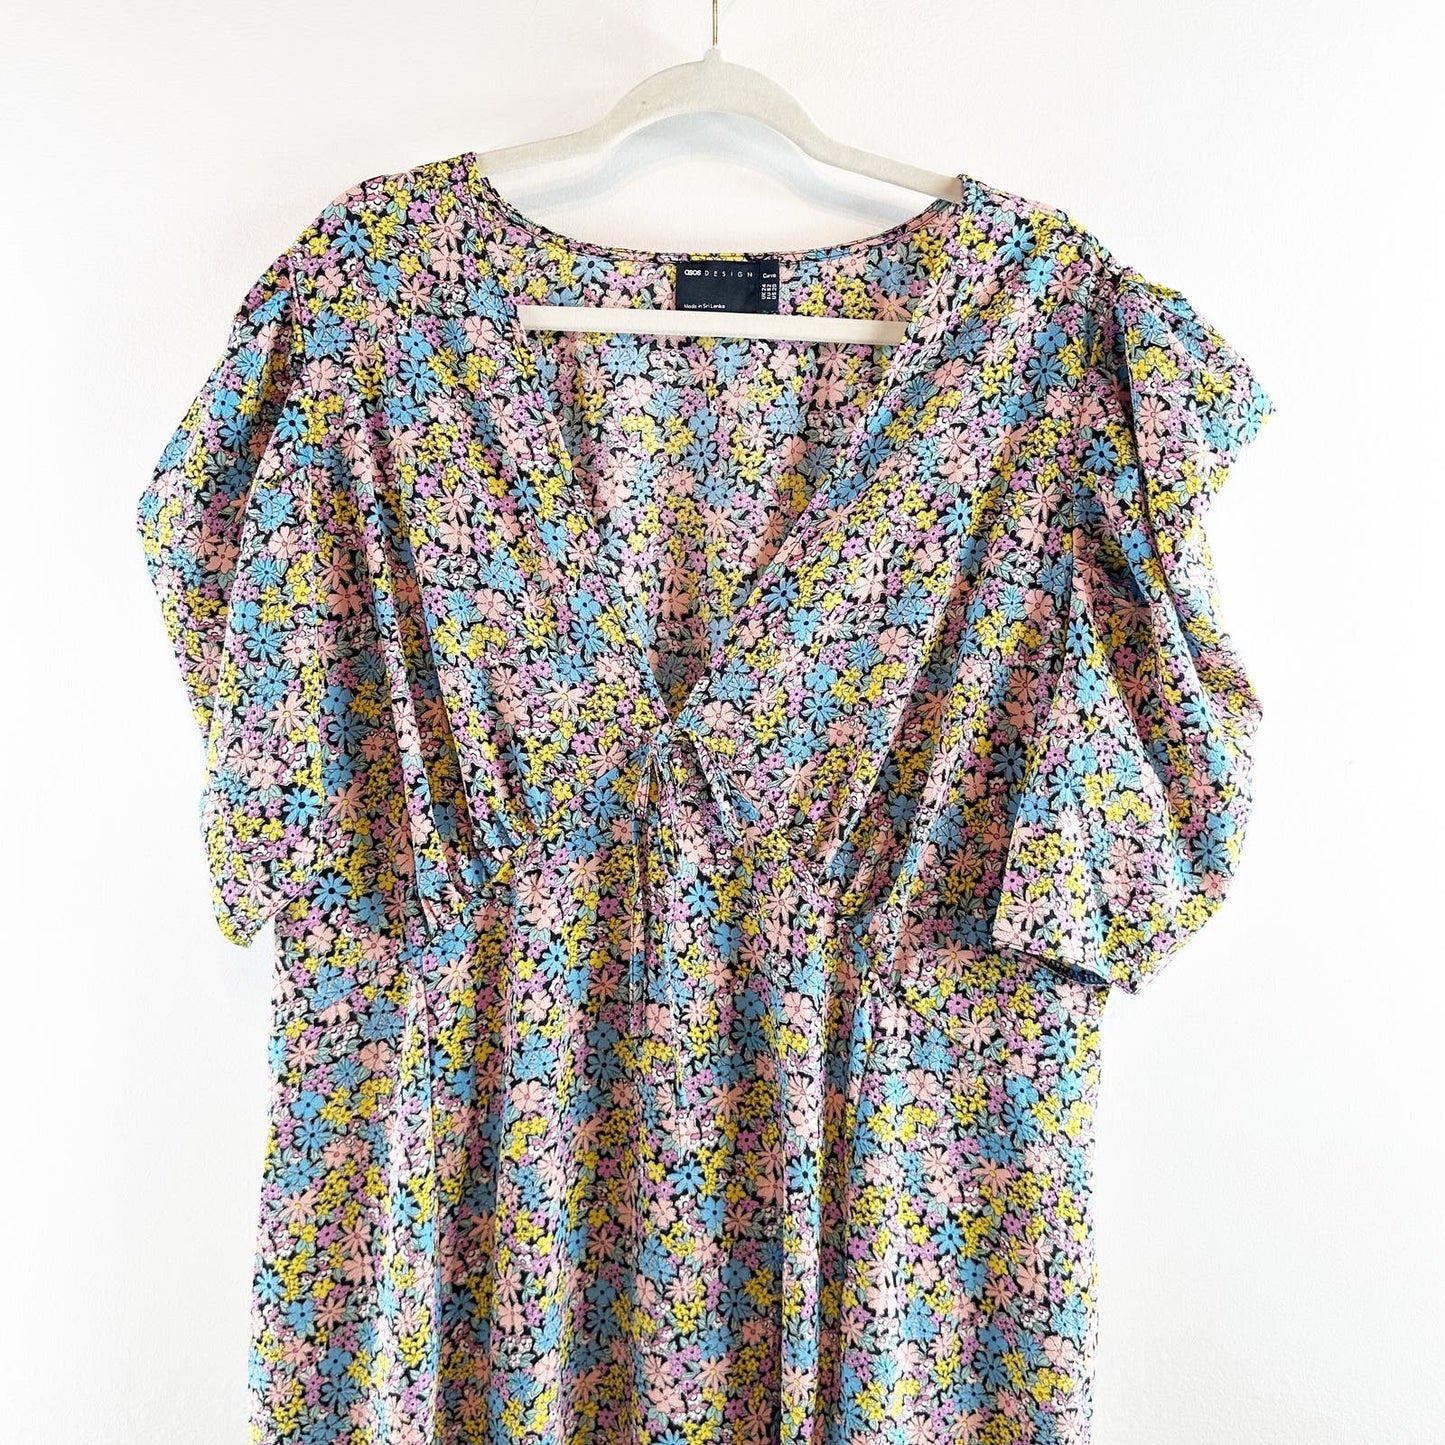 ASOS DESIGN Curve Puff Sleeve Midi Tea Dress in Multicolored Floral Print 20